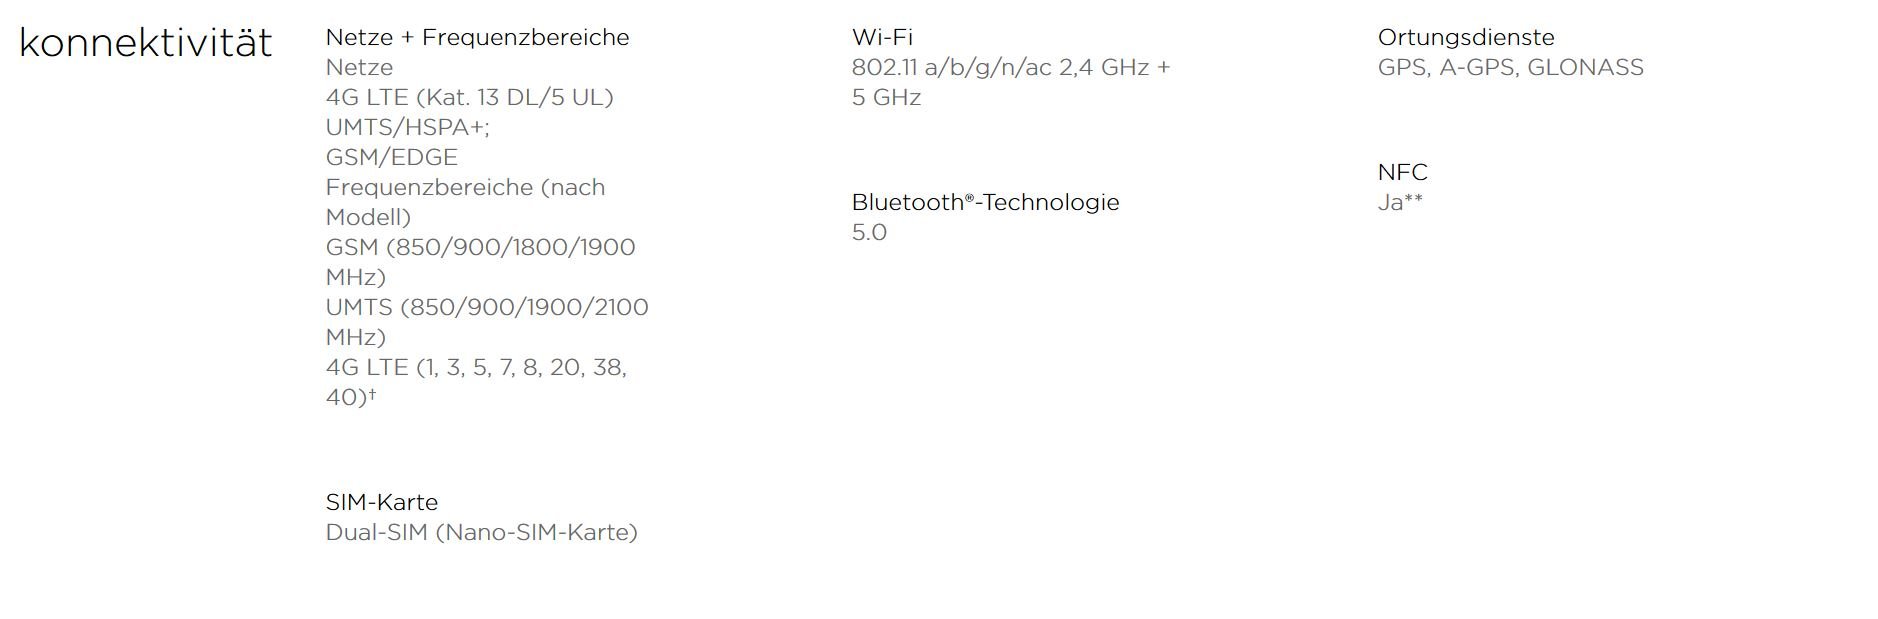 Motorola Moto G6 Plus 64GB Single-SIM (GSM Only, No CDMA) Factory Unlocked 4G Smartphone (Indigo Blue) - International Version